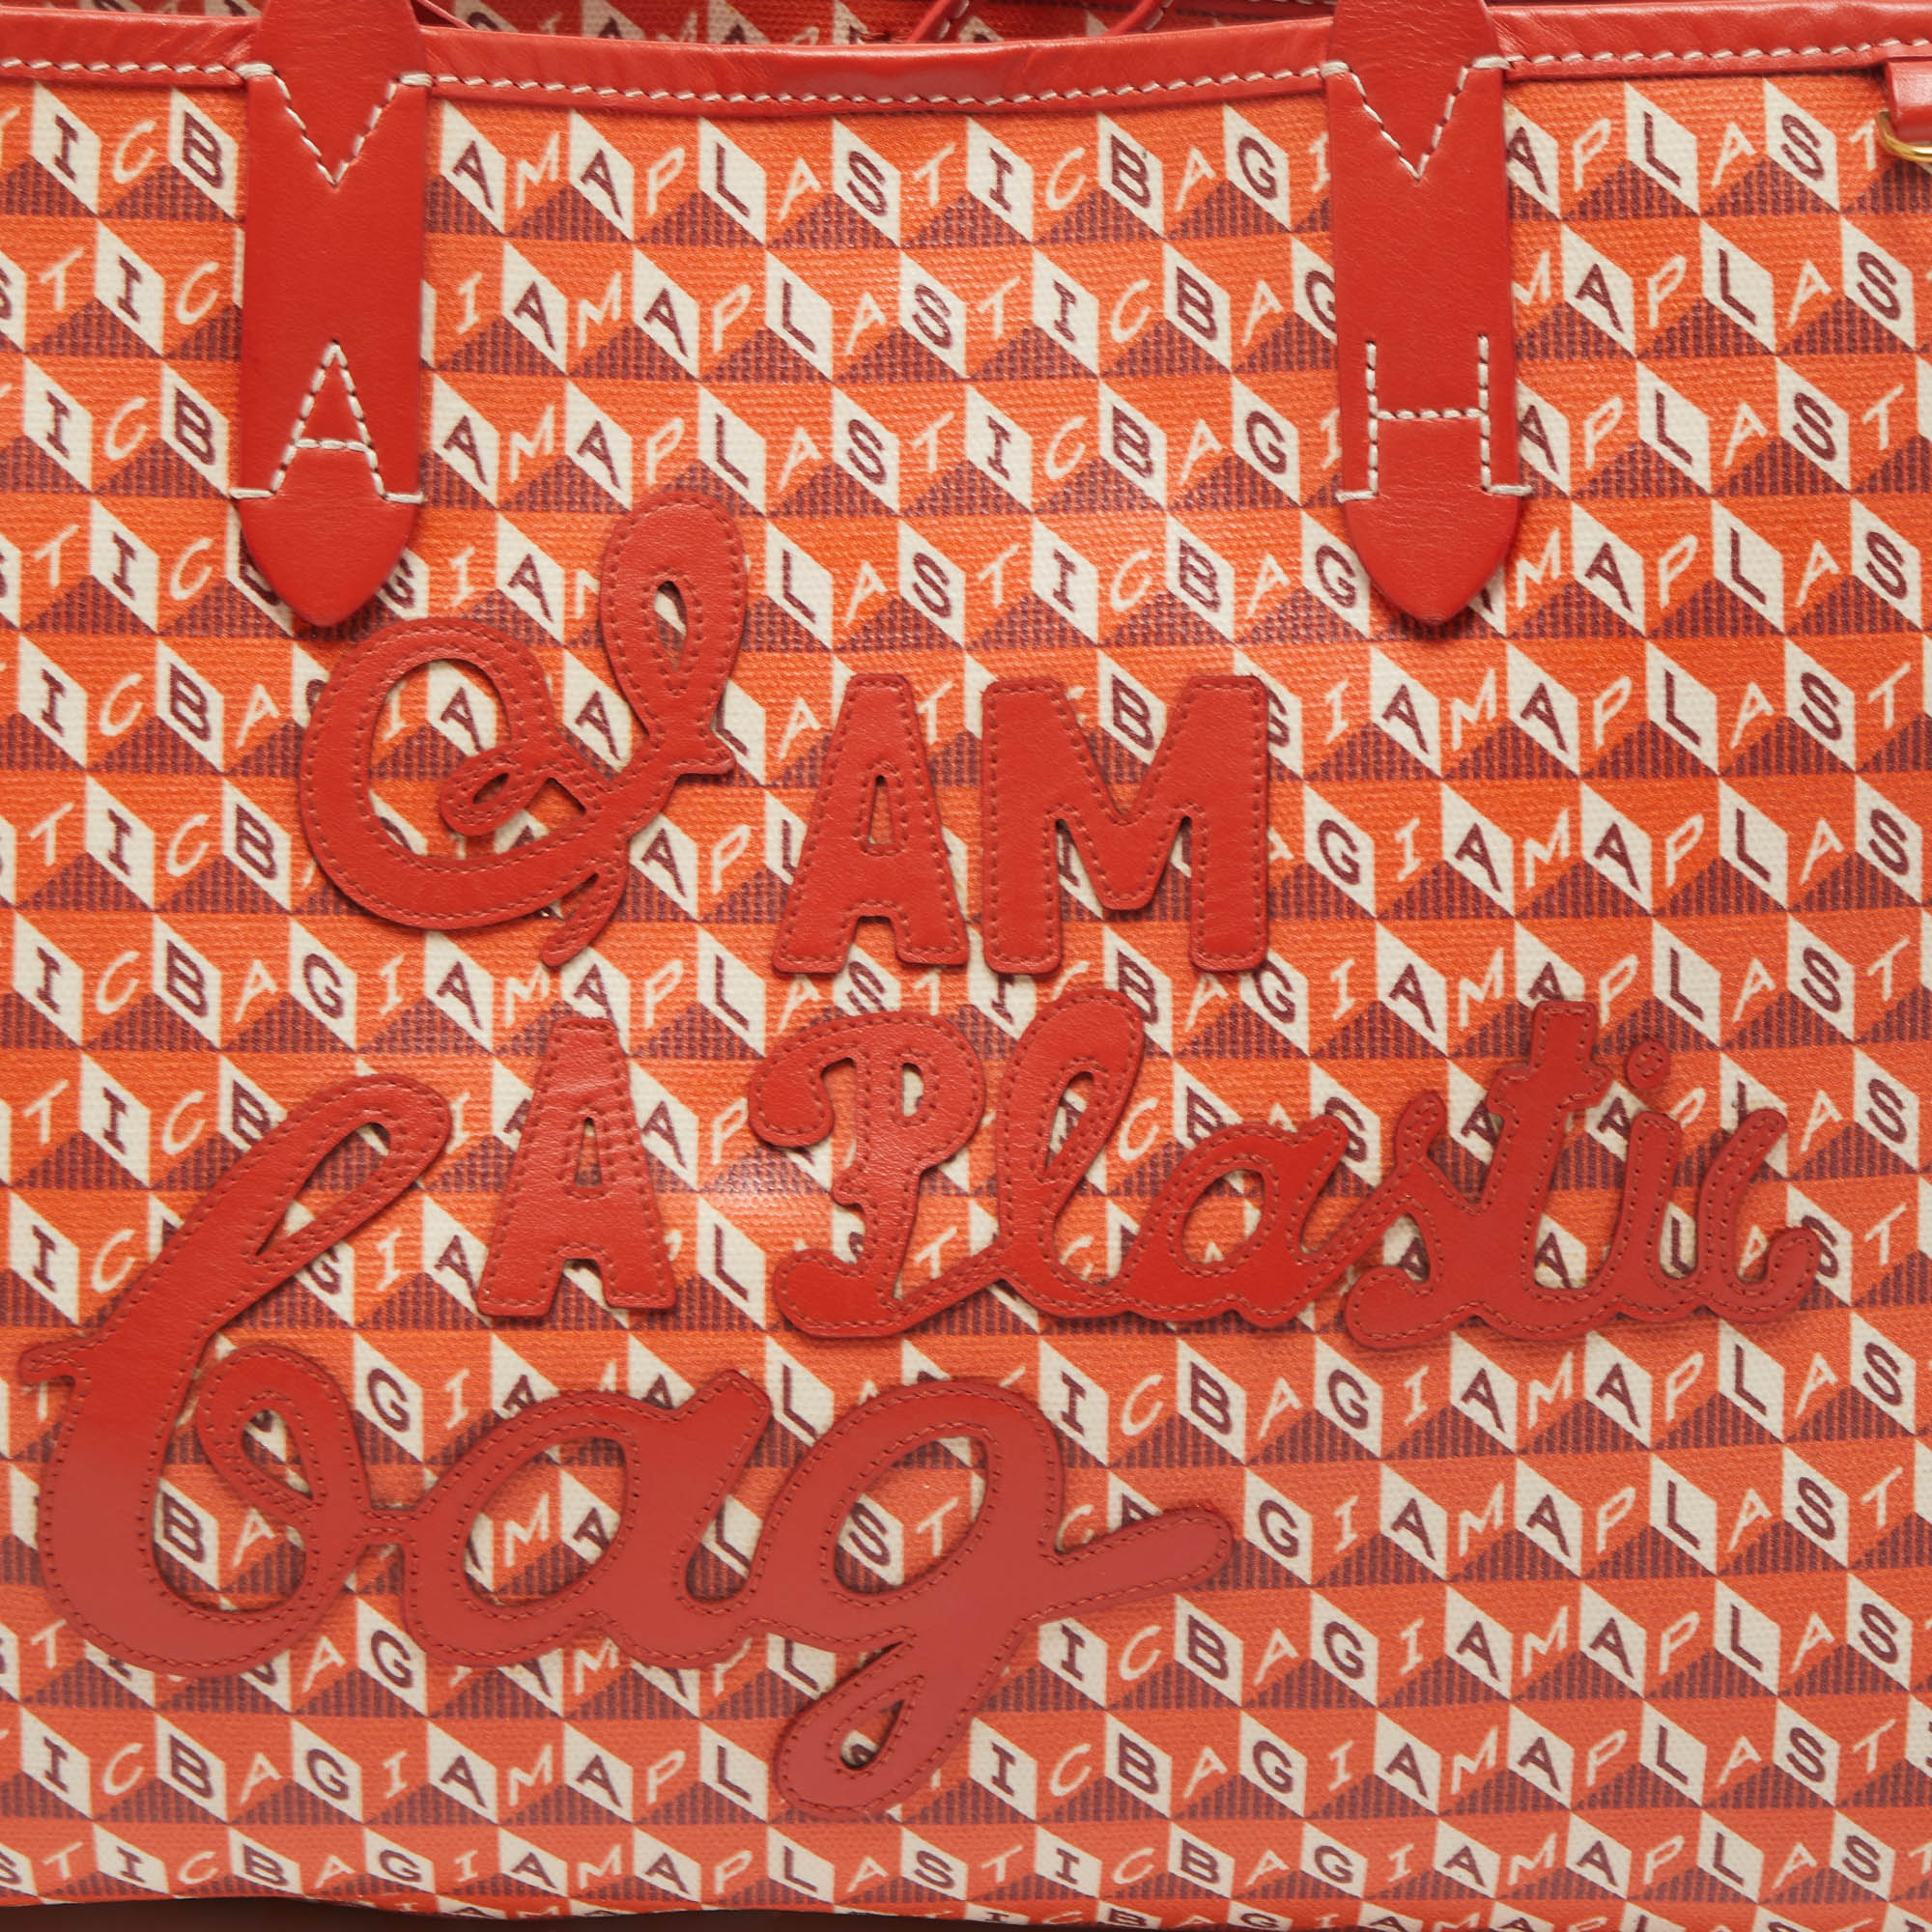 Anya Hindmarch Red/Orange Coated Canvas 'I Am A Plastic Bag' Tote